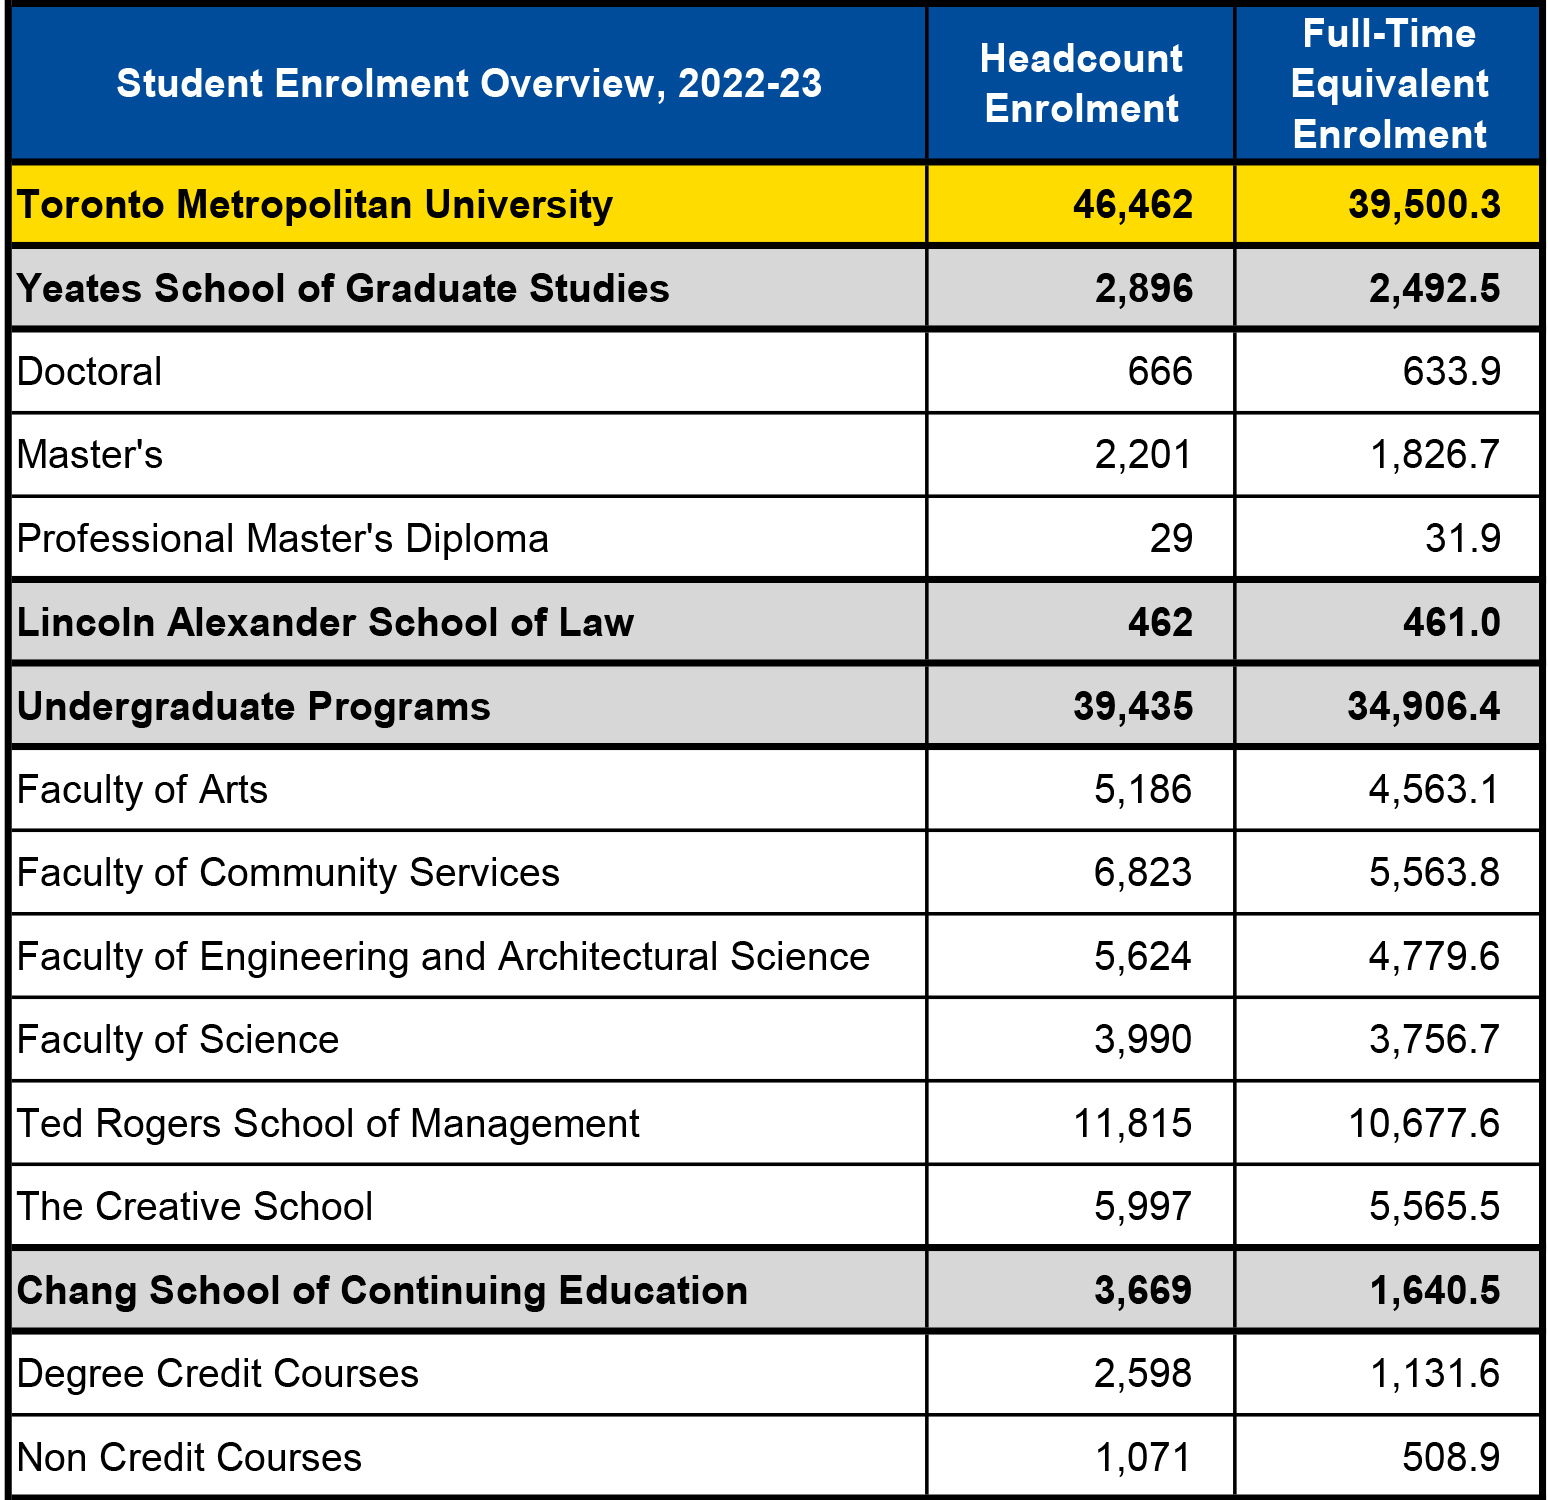 Student Enrolment Overview for 2022-23